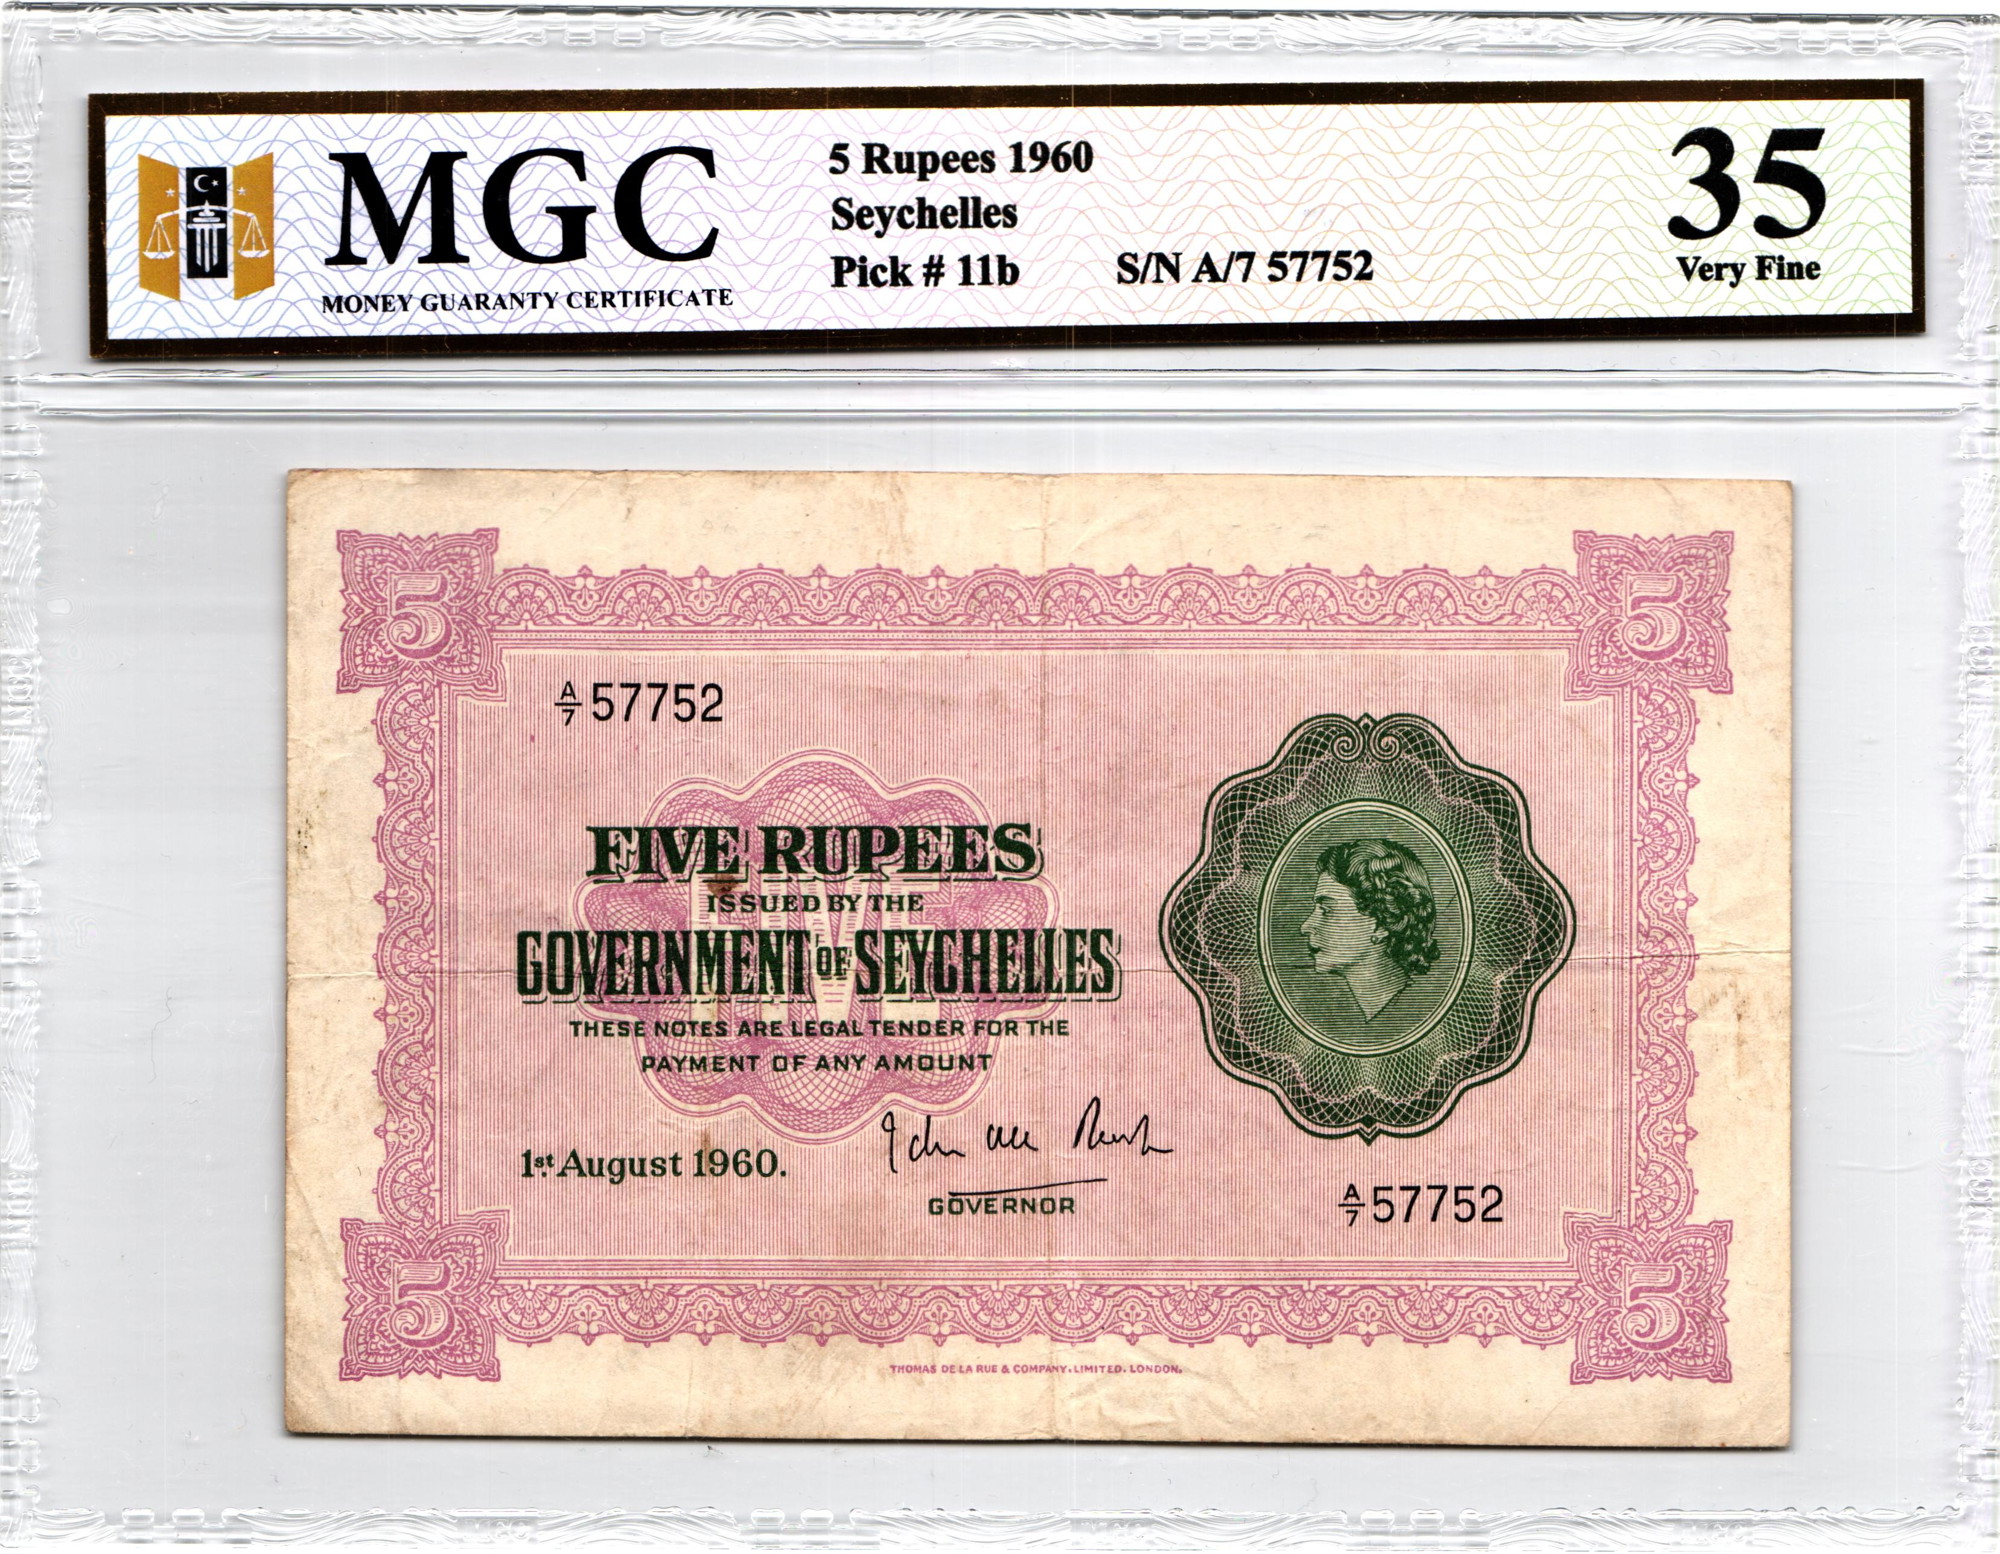 Seychelles 5 Rupees 1960 MGC 35 Very Fine | Katz Auction